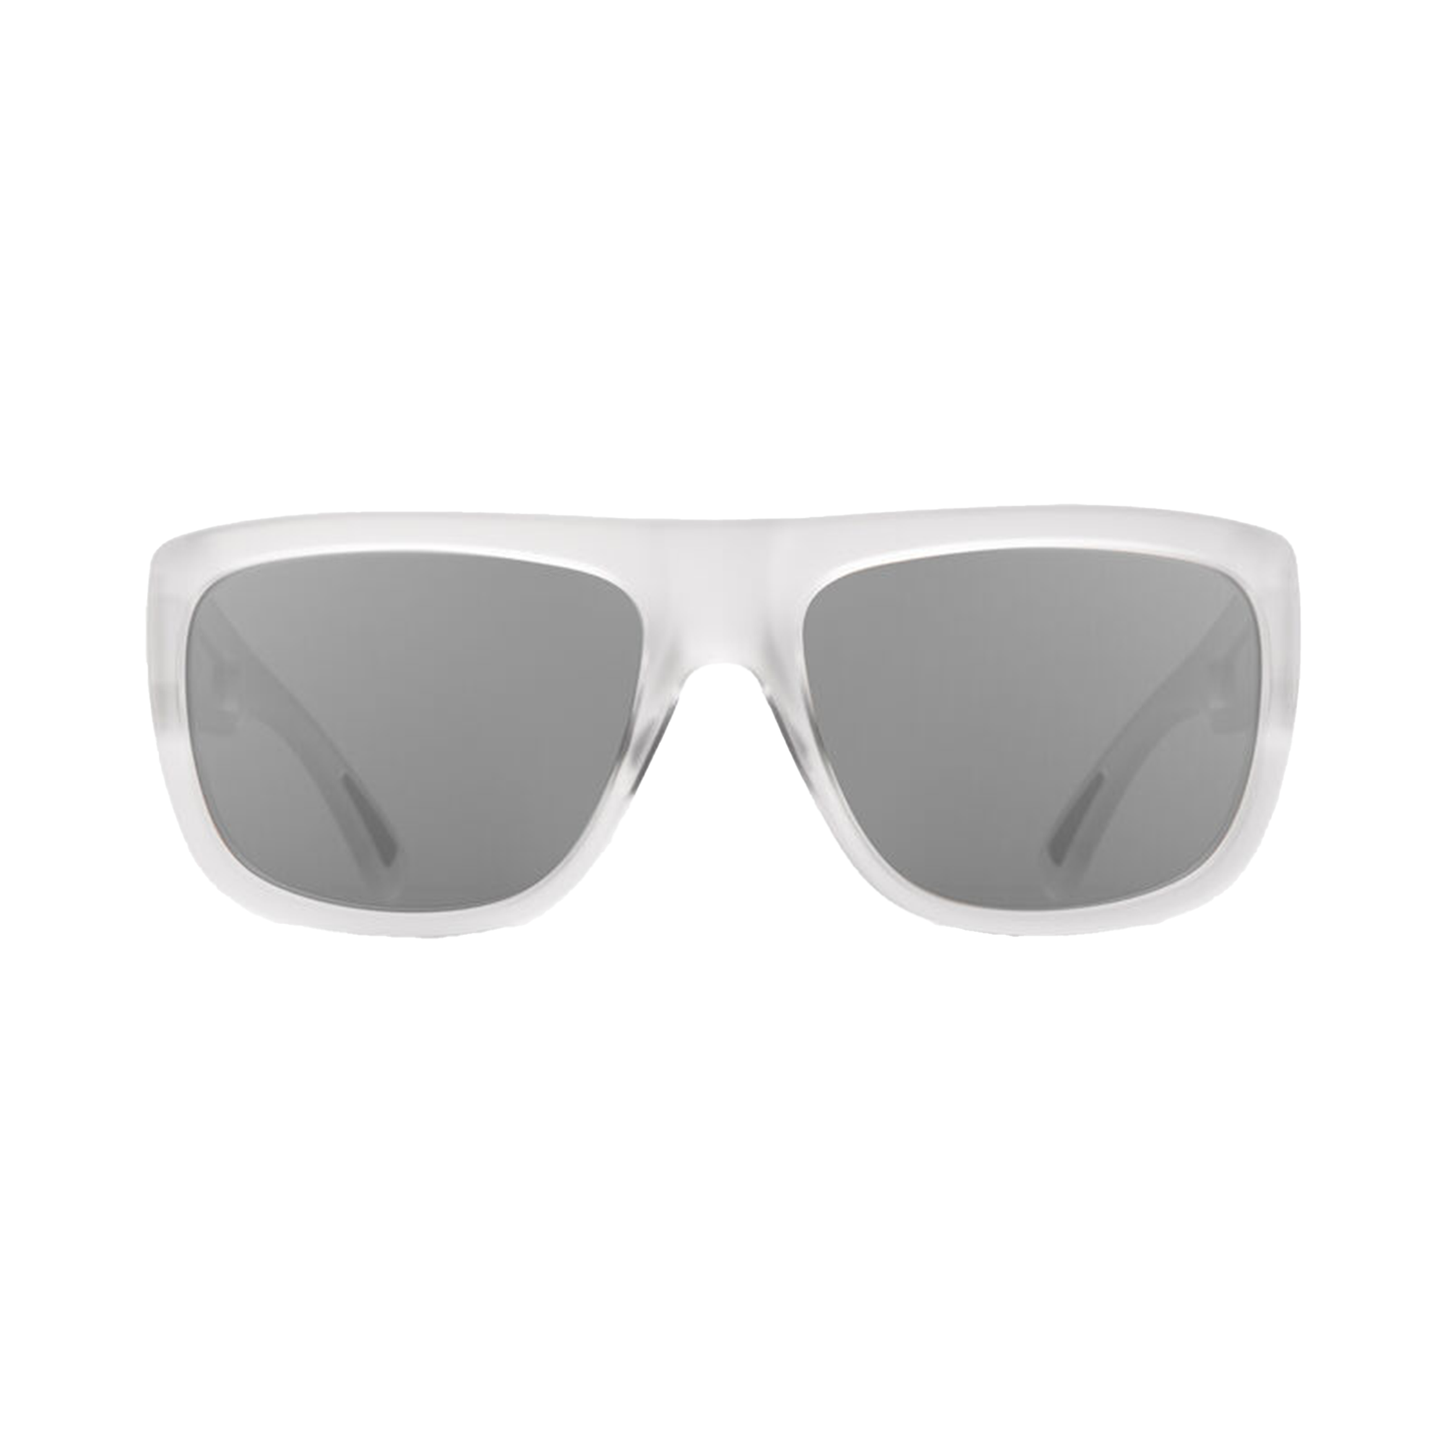 Giro Wilson Sunglasses Matte Clear VIVID Onyx Sunglasses